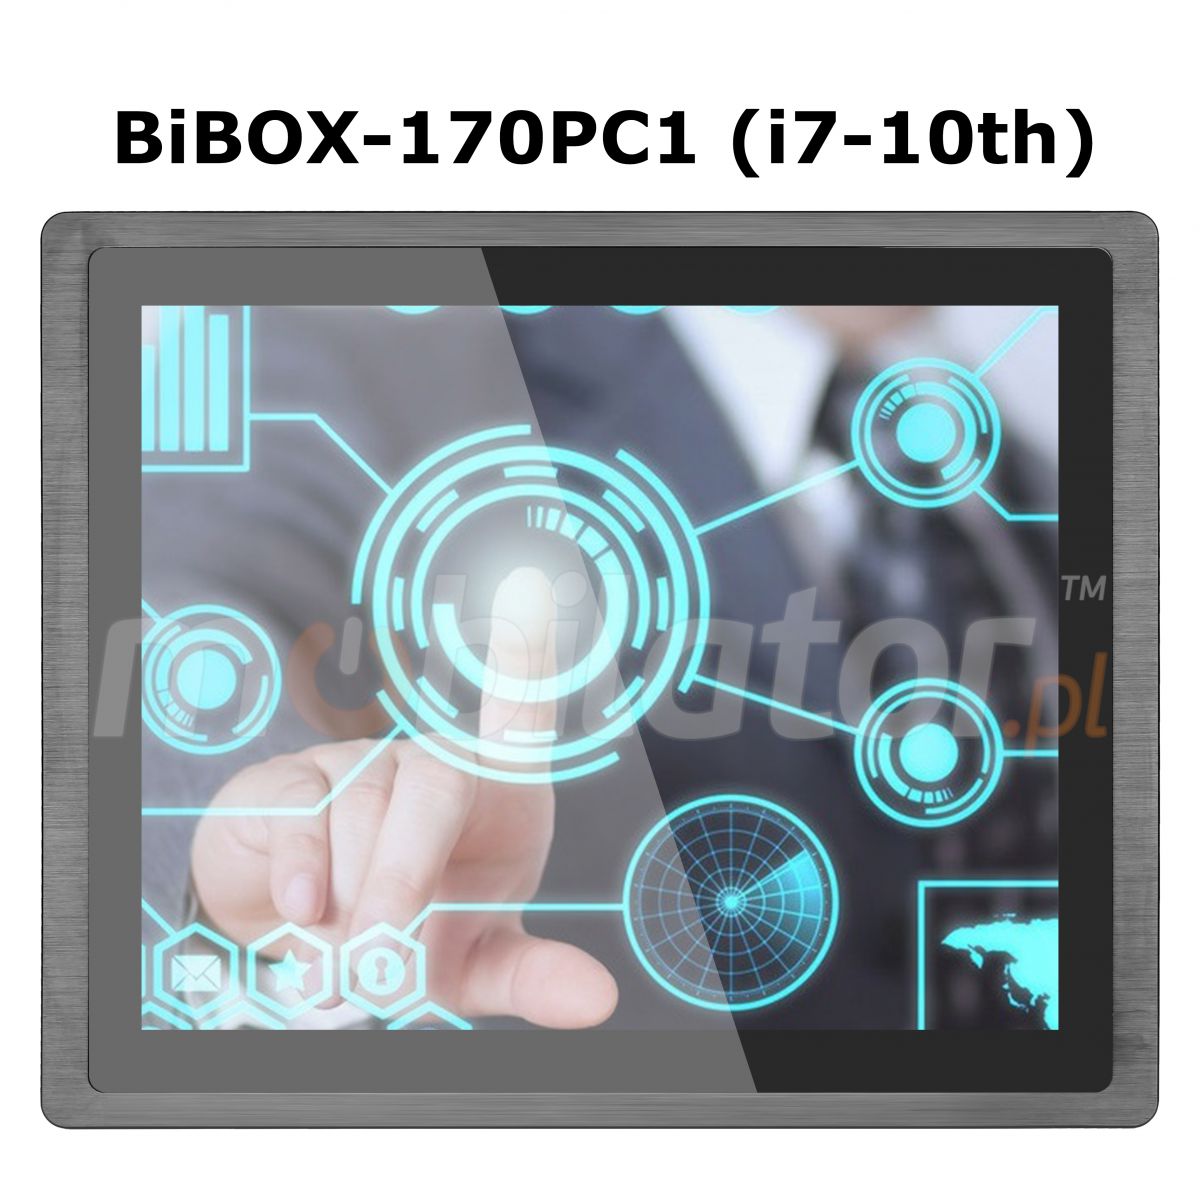 BiBOX-170PC1 -  Industrial panel PC with efficient Intel Core i7 processor